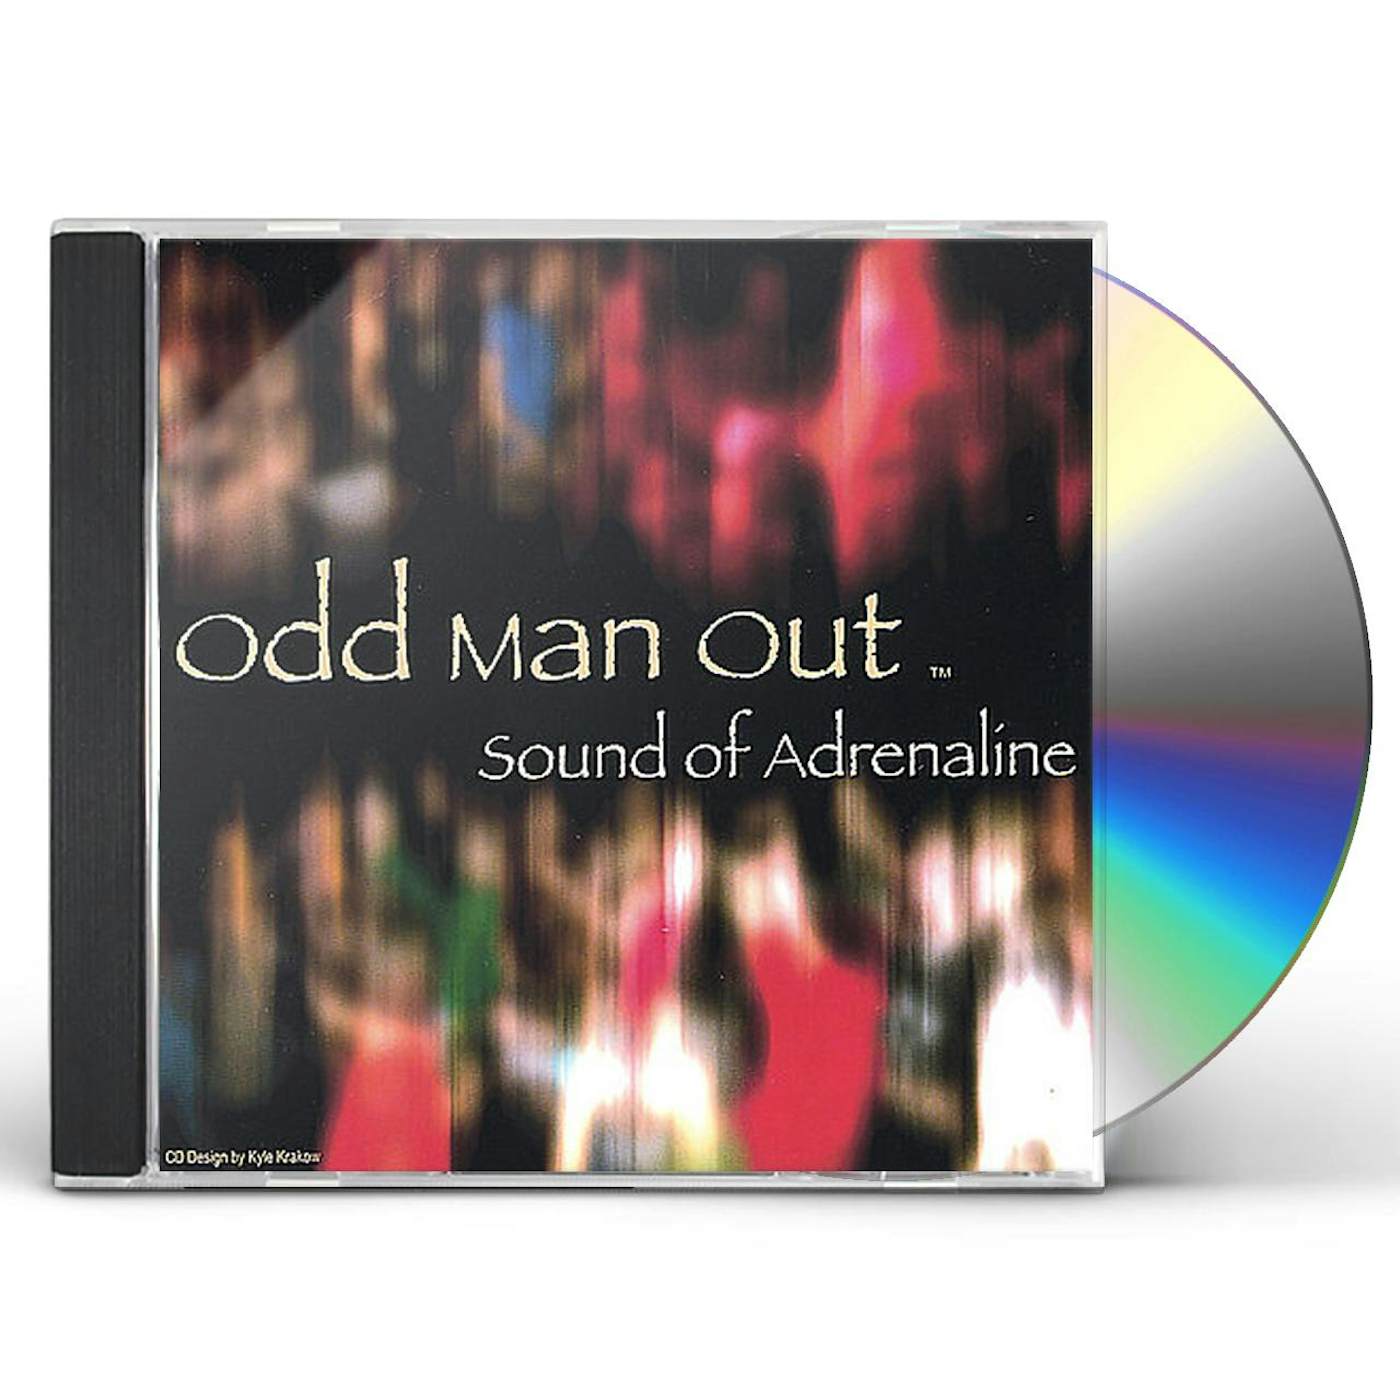 Odd Man Out SOUND OF ADRENALINE CD